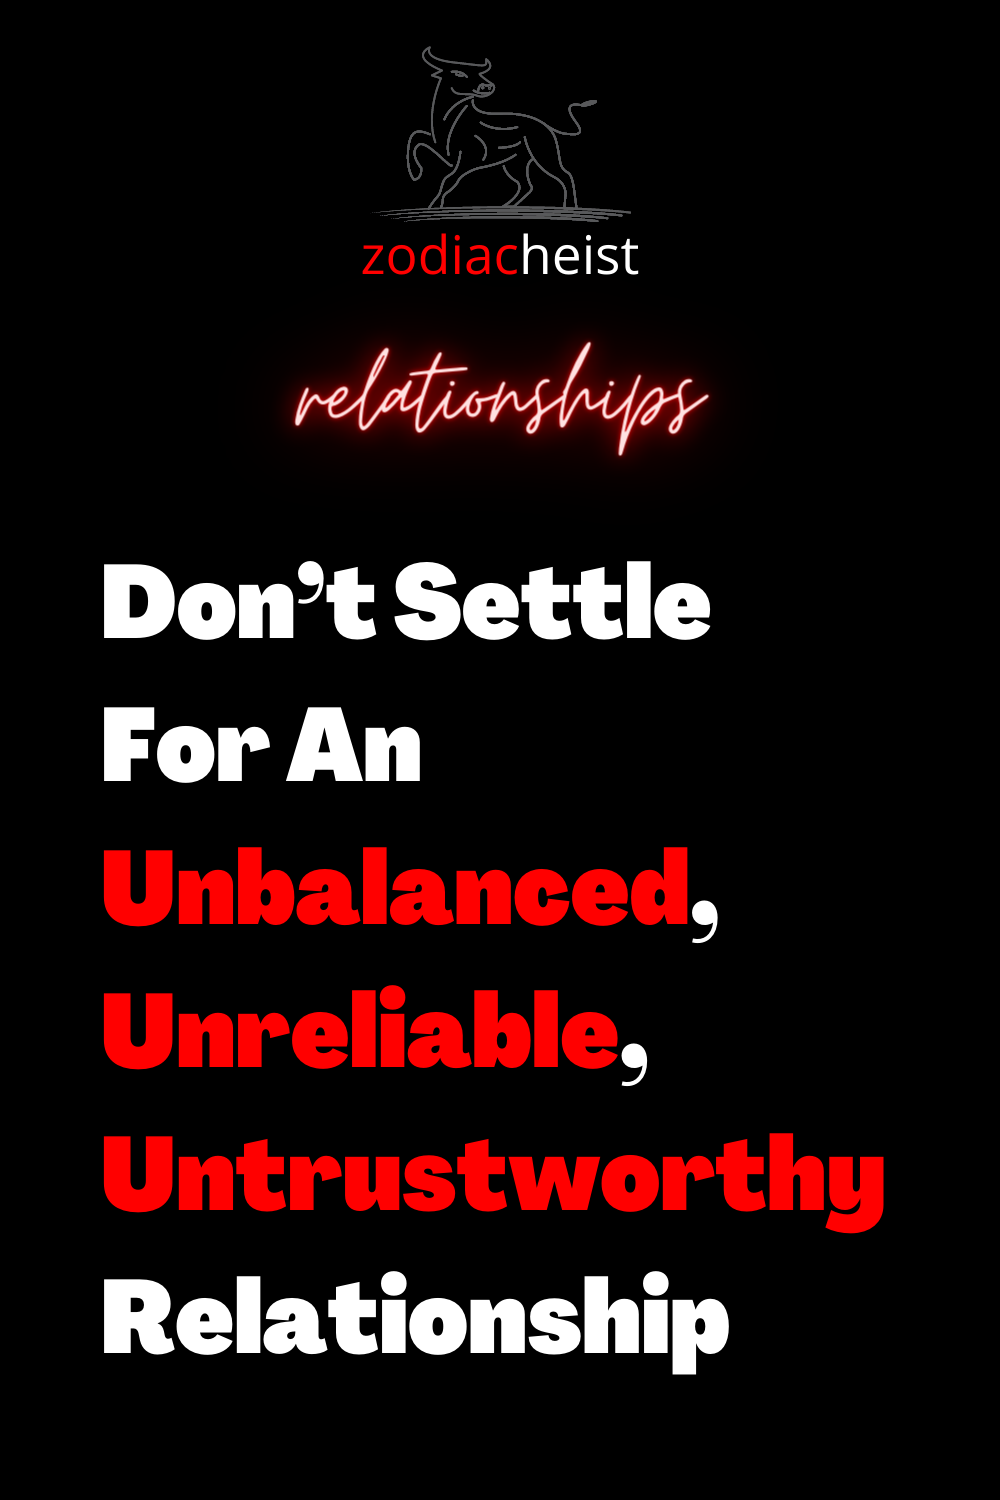 Don’t Settle For An Unbalanced, Unreliable, Untrustworthy Relationship